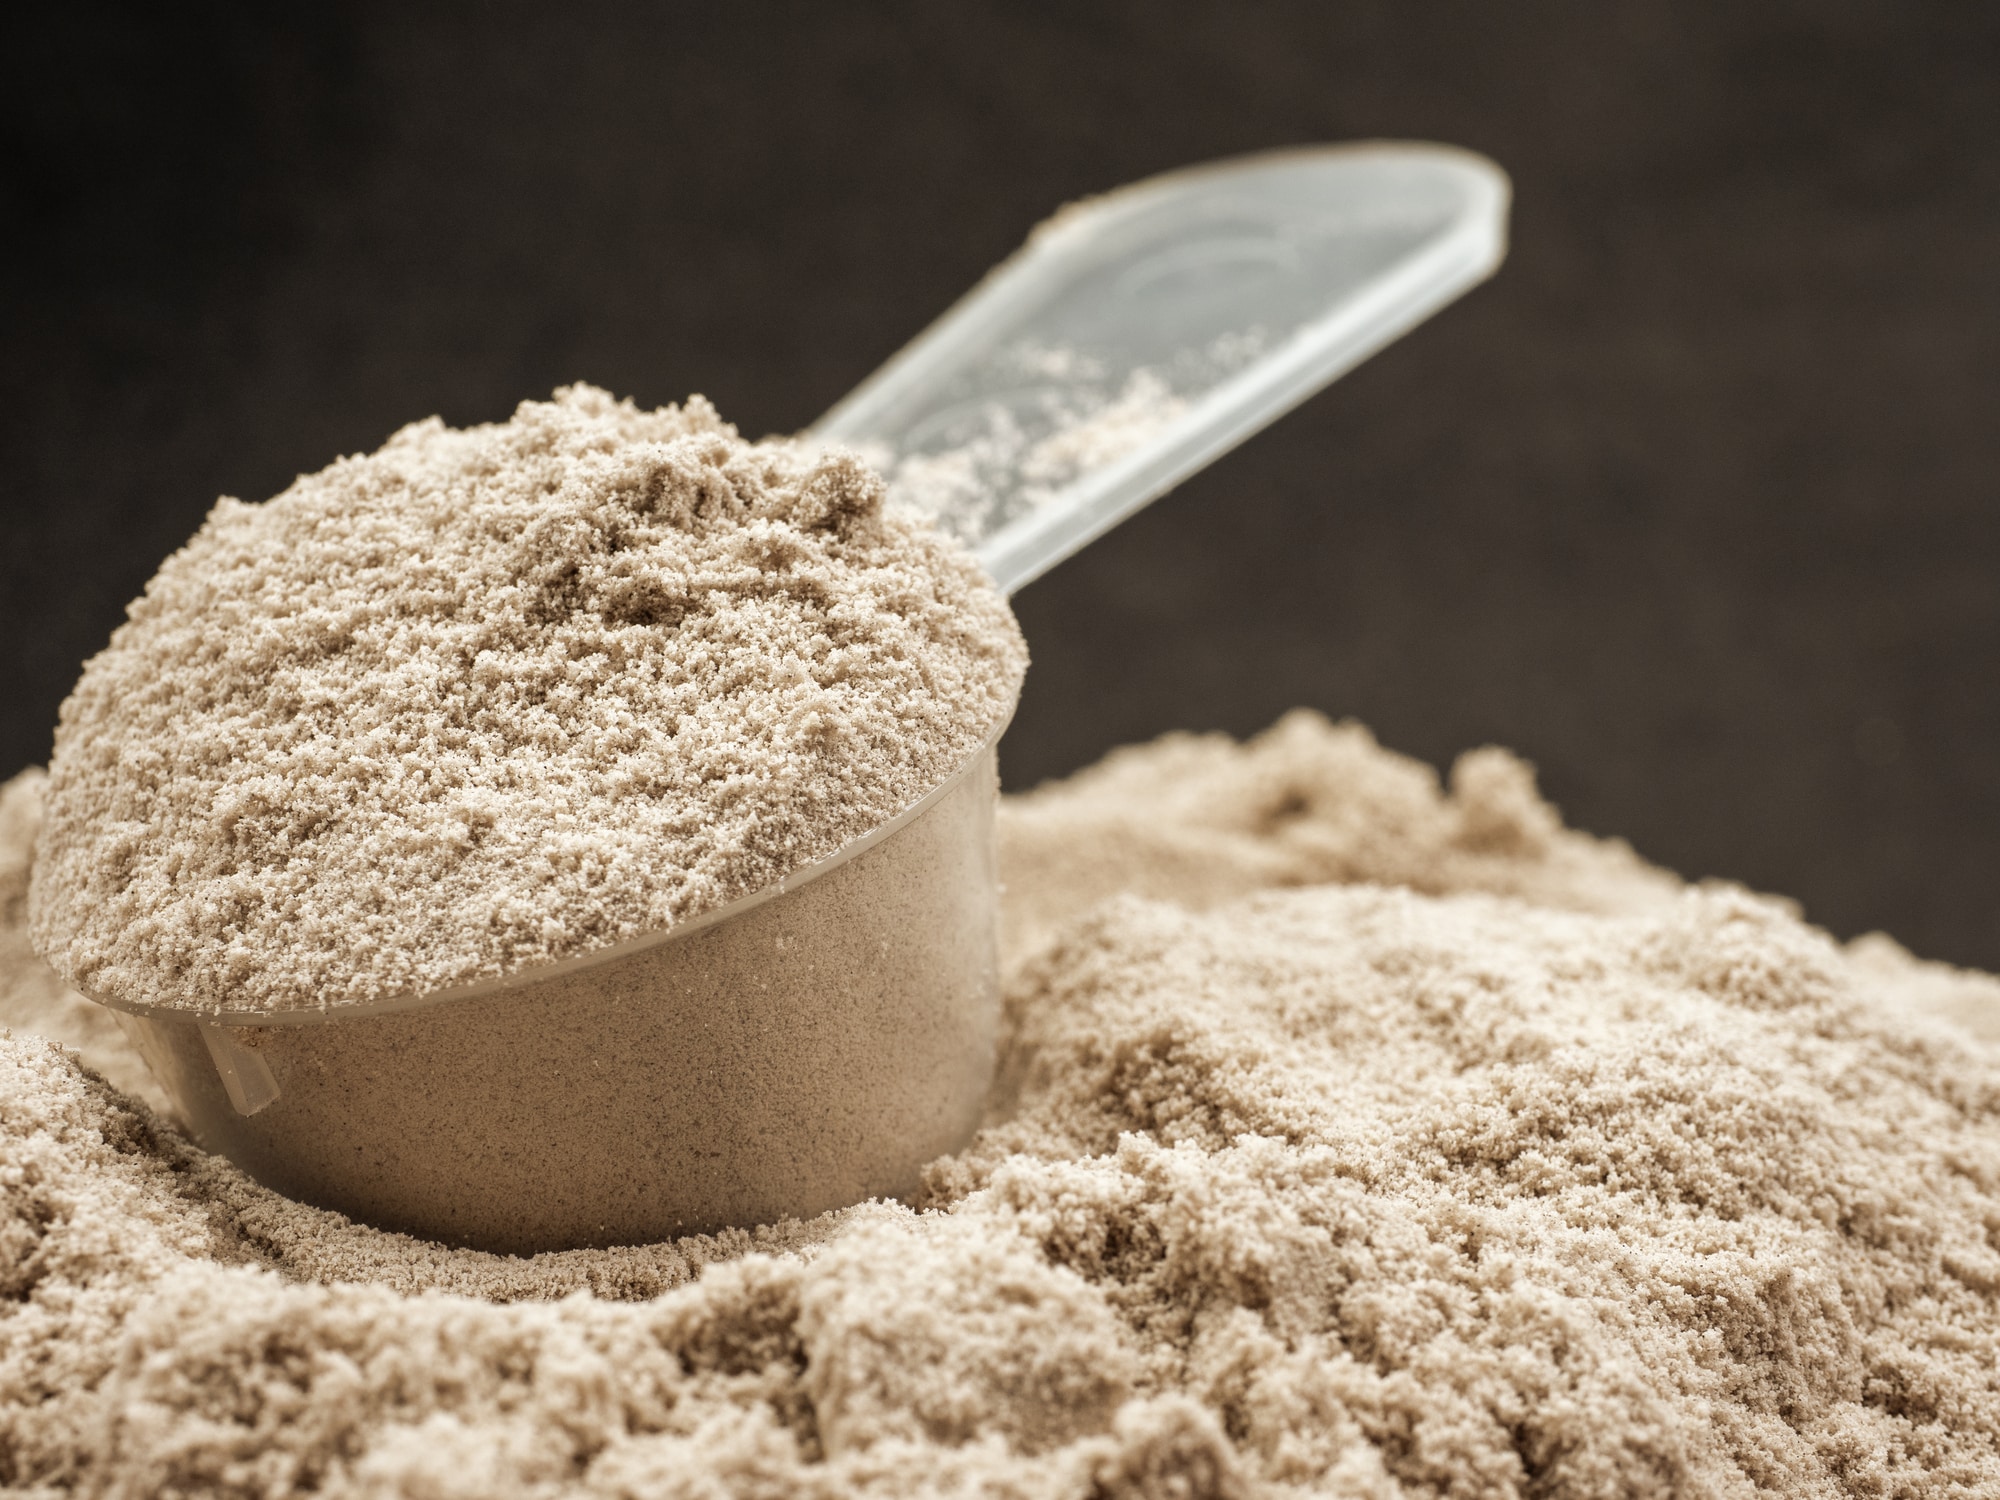 The scoop on protein powder - Harvard Health